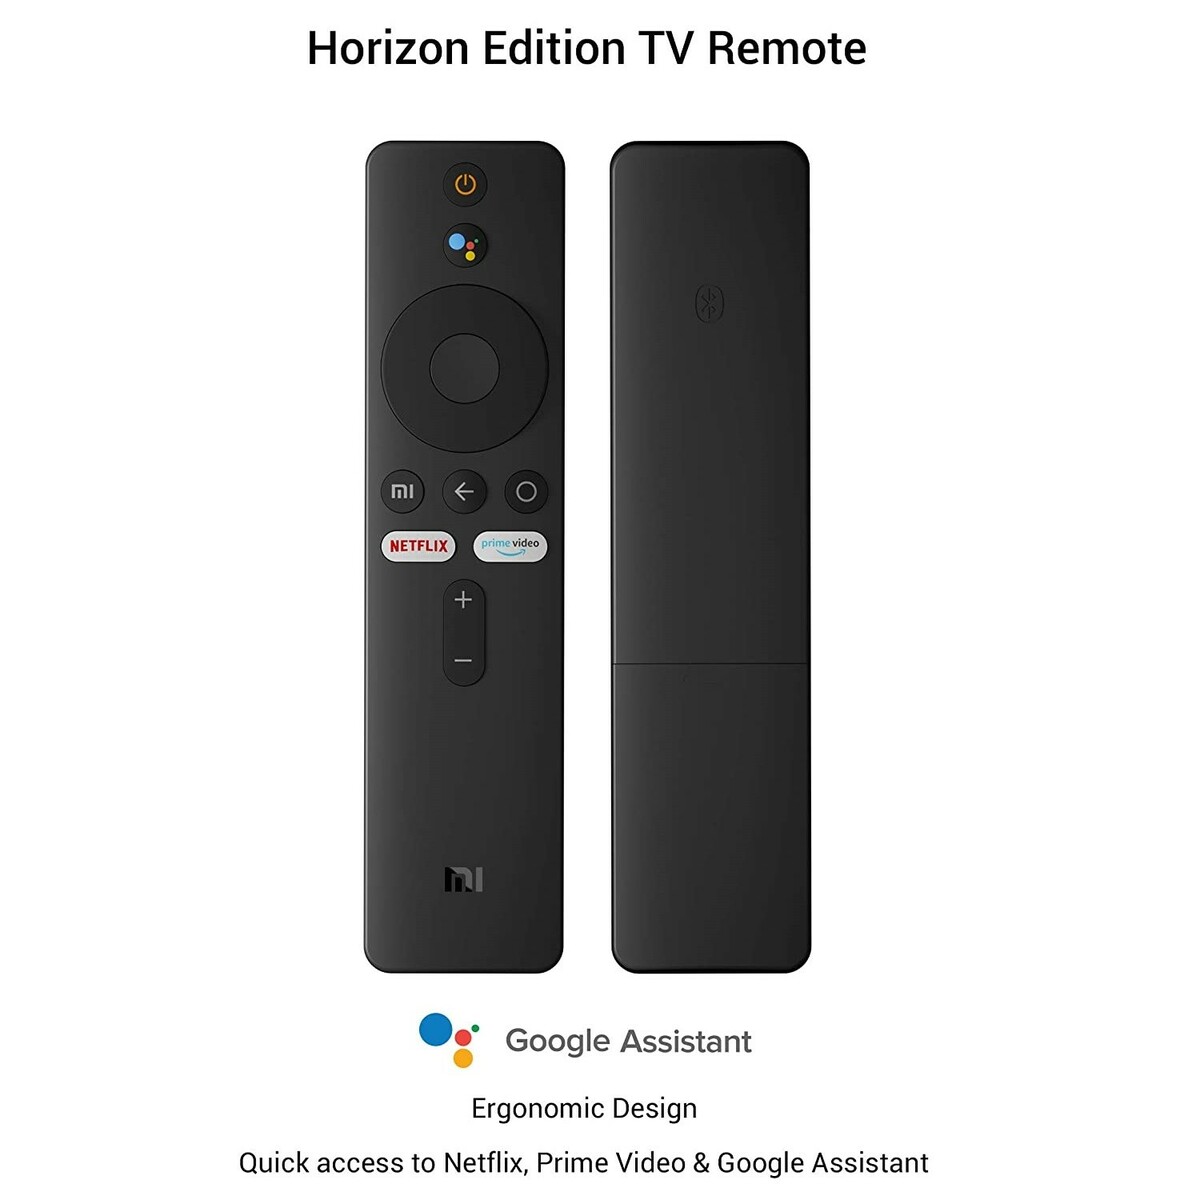 Xiaomi HD LED Smart TV 32 4A Horizon Edition 32"